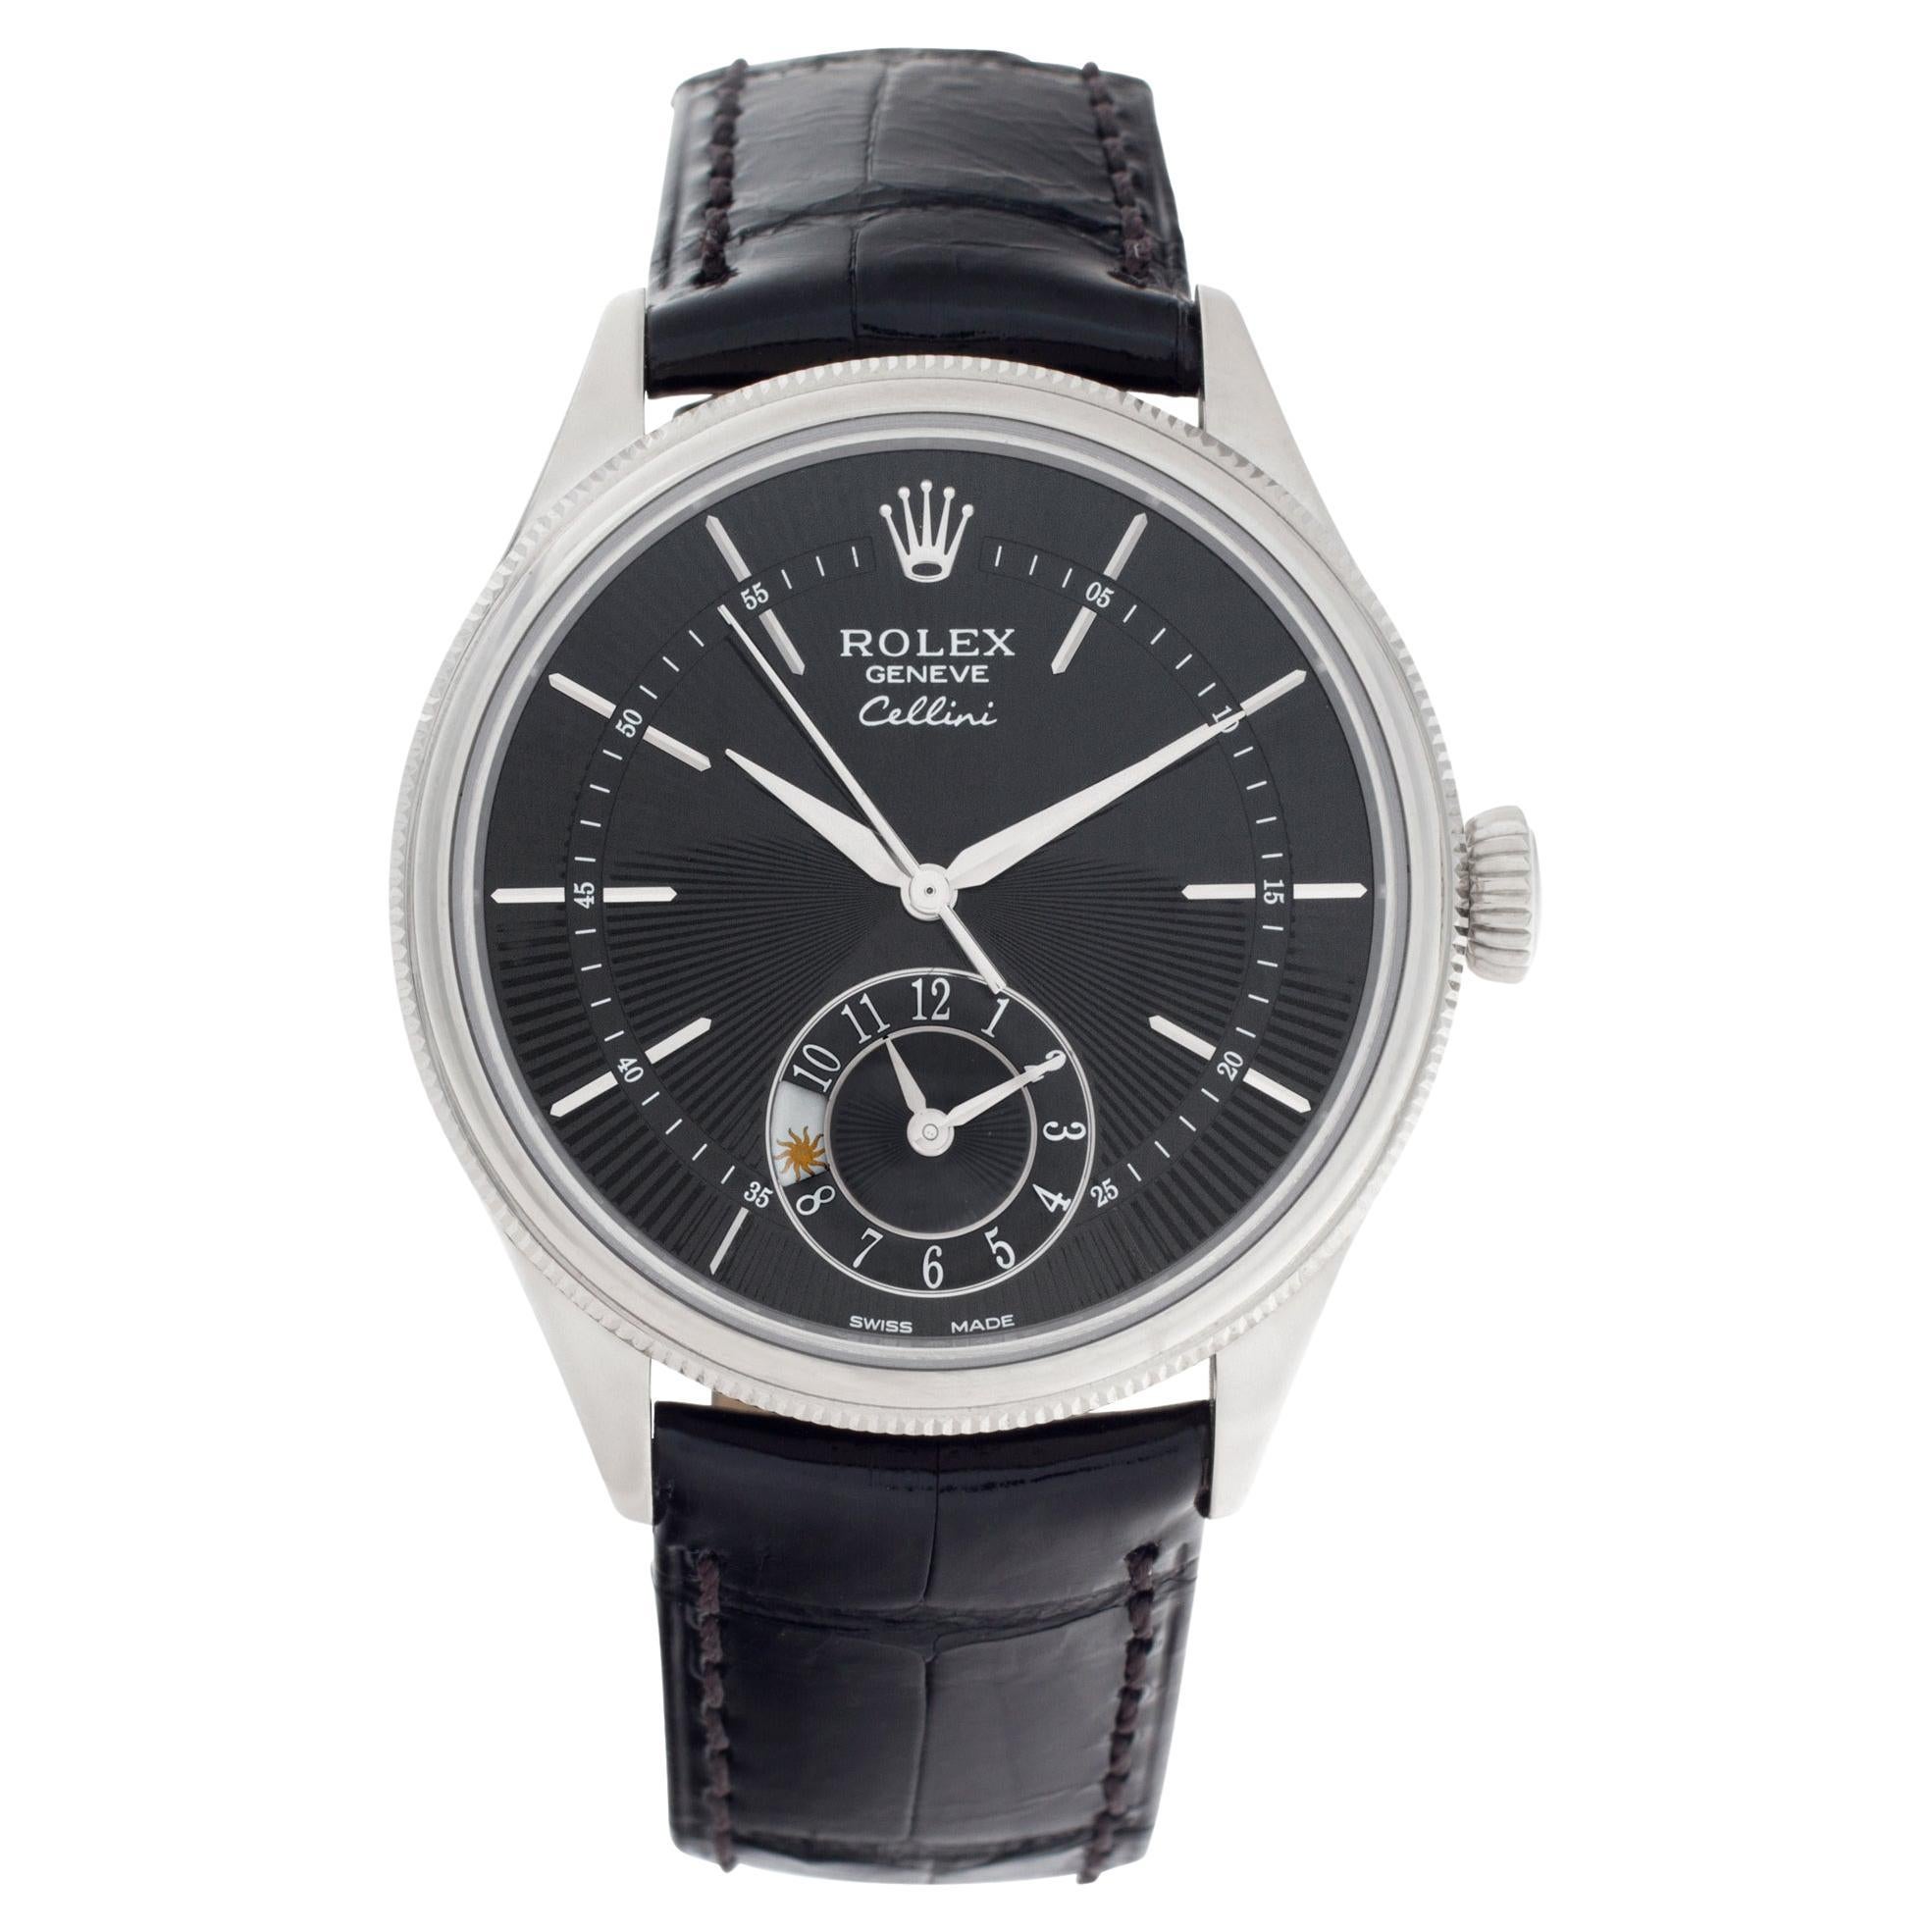 Did Rolex ever make an All Black Watch?